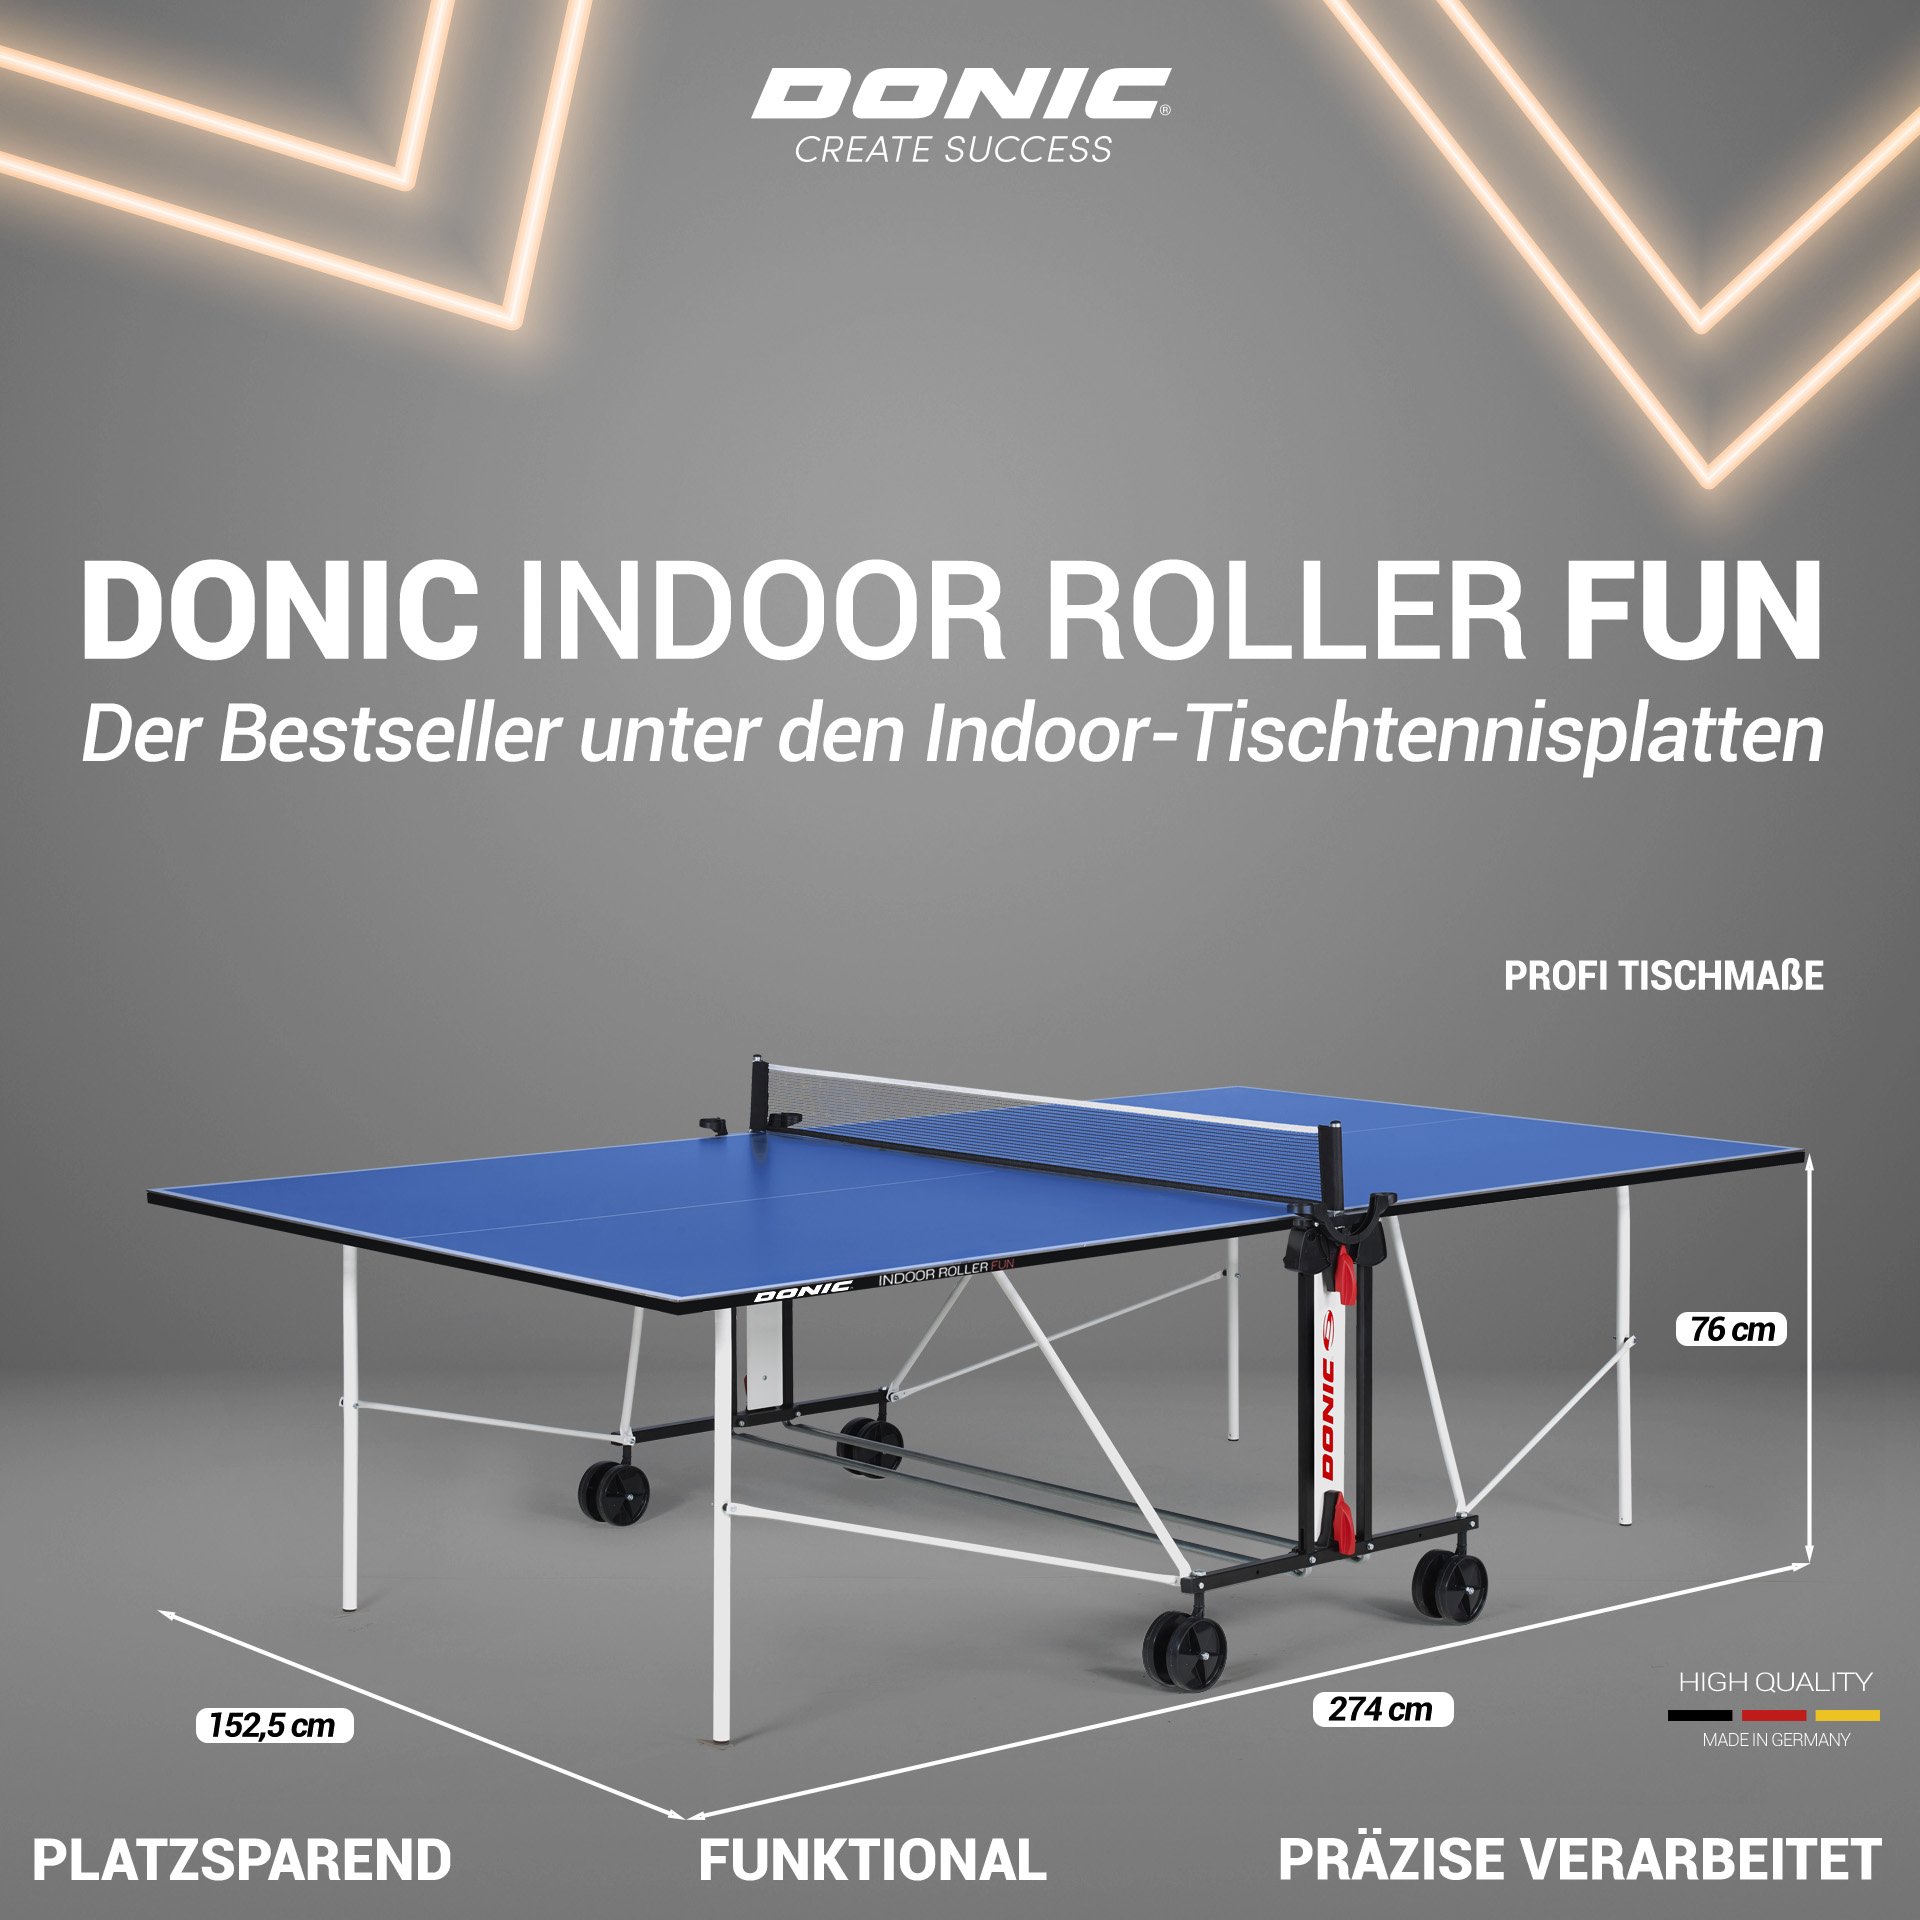 Fun Indoor Donic Roller CREATE SUCCESS |